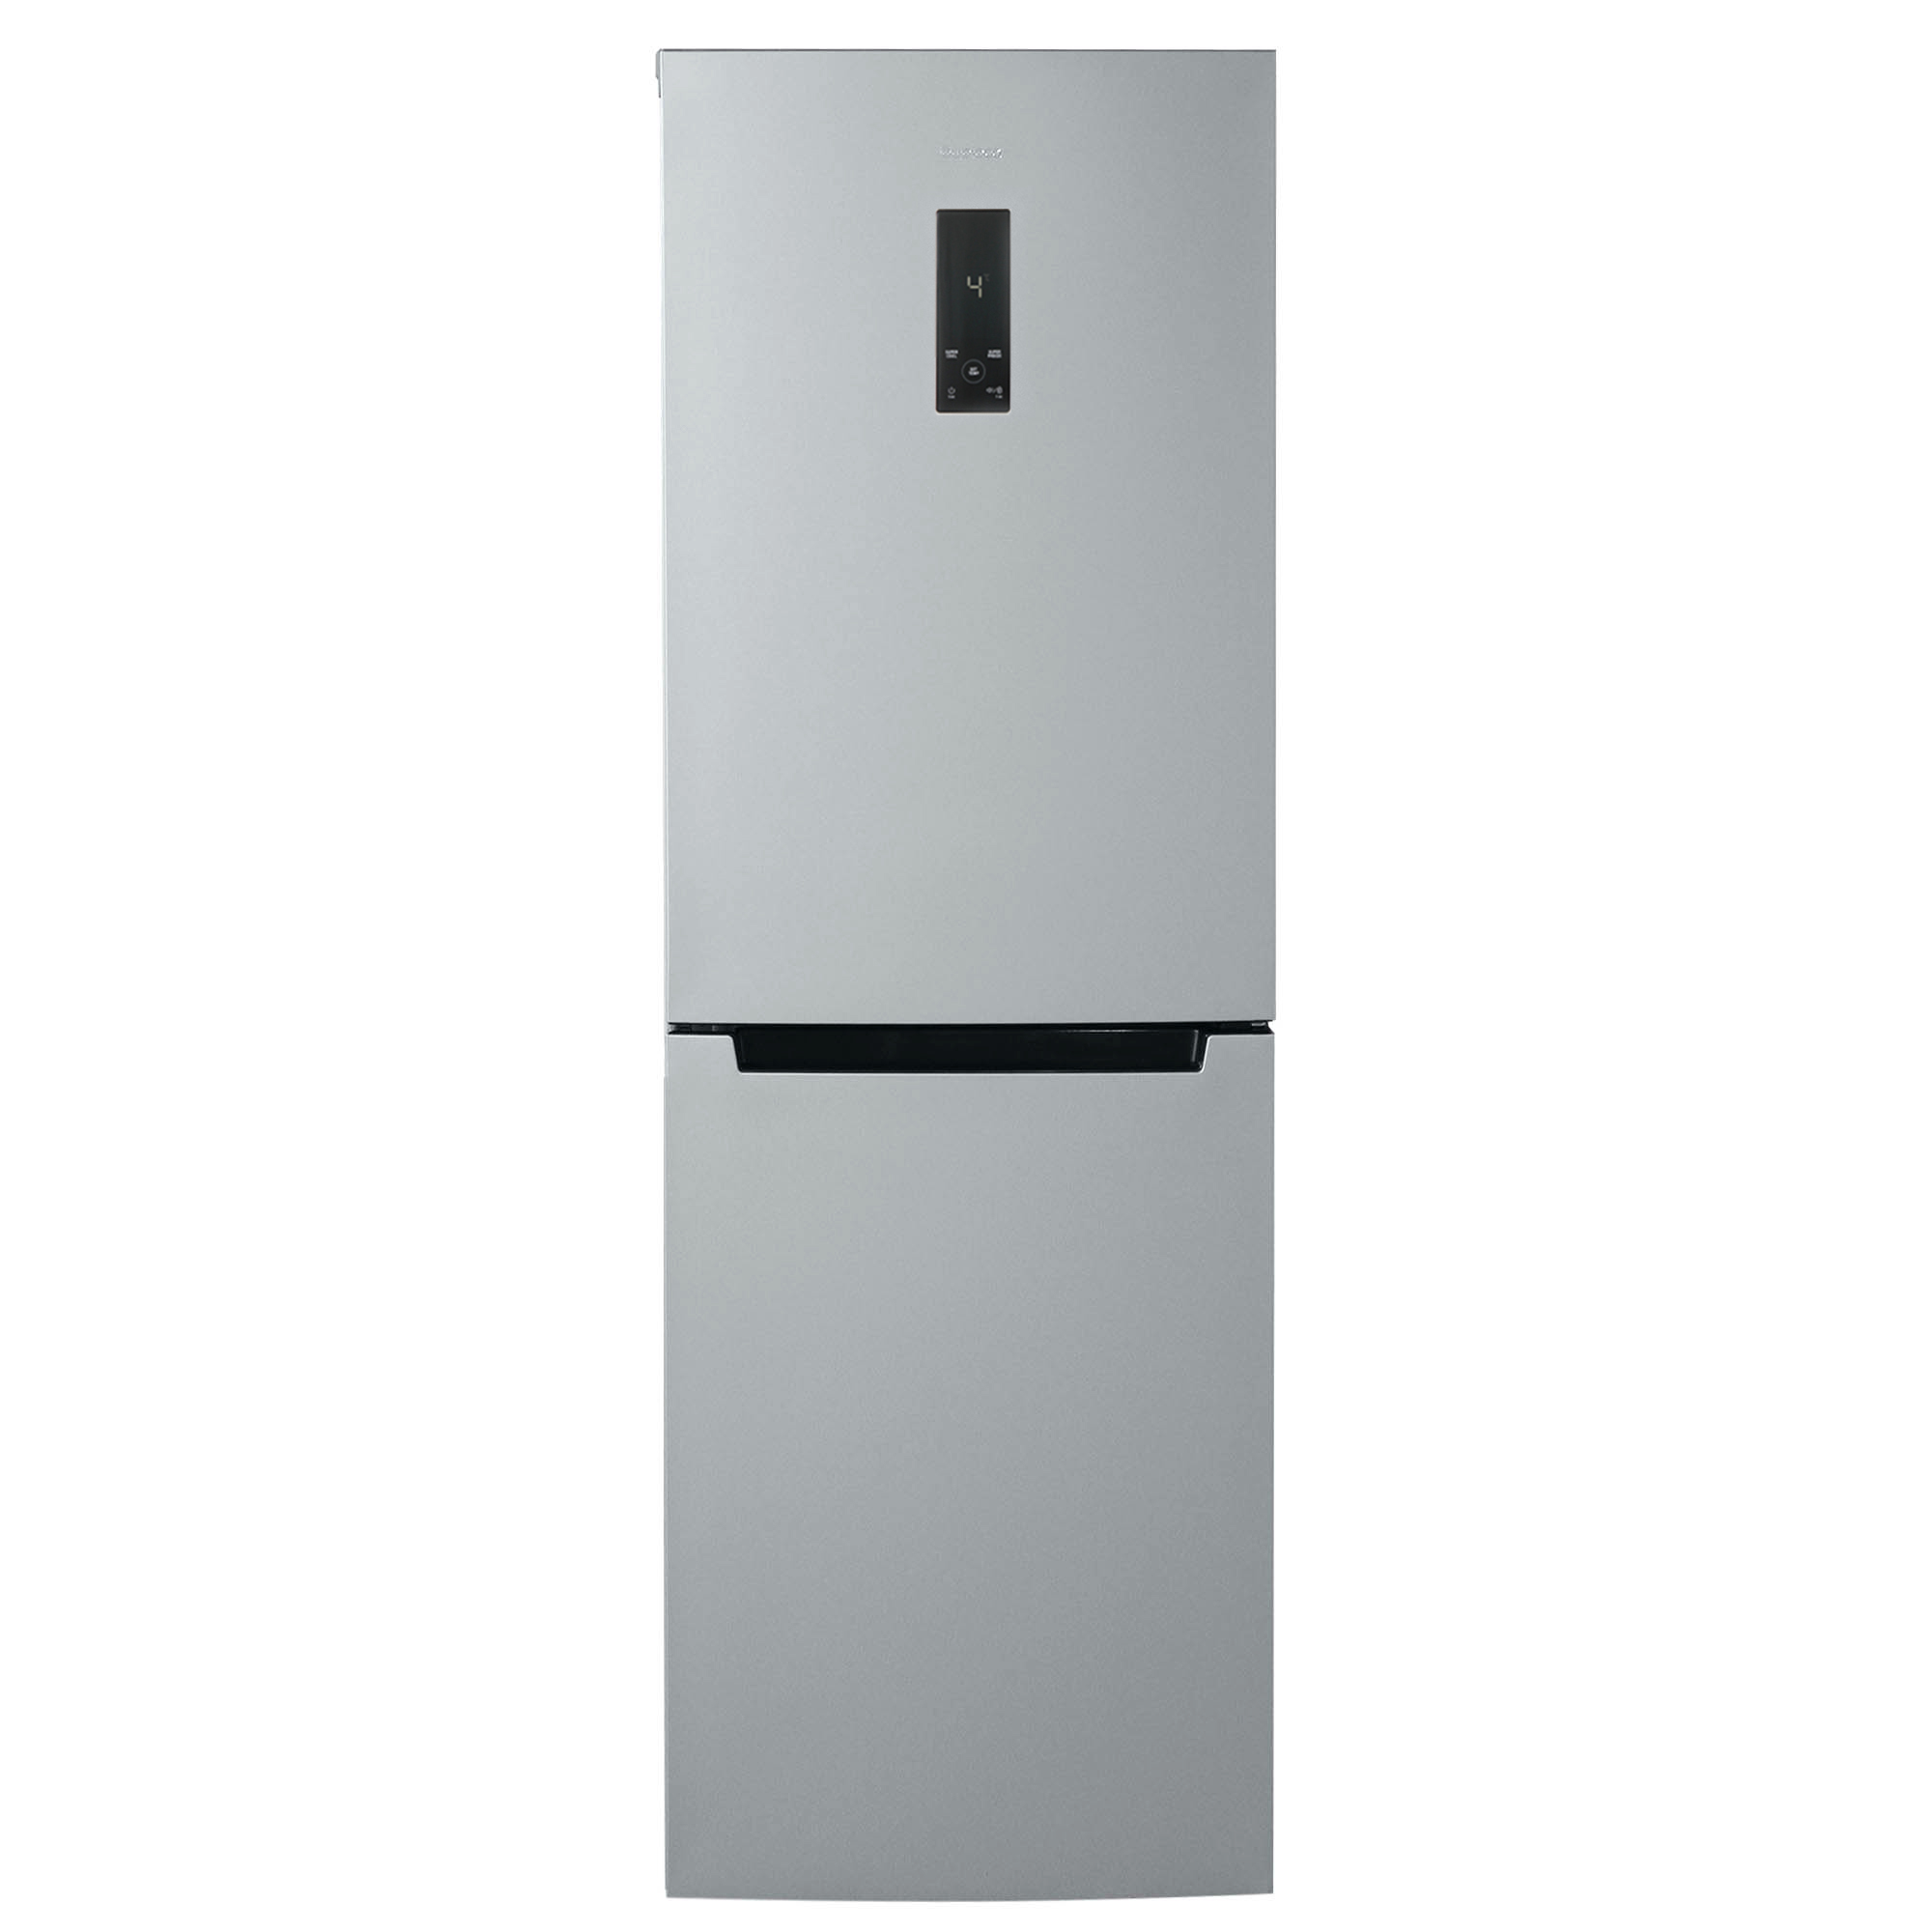 Холодильник Бирюса M940NF серебристый